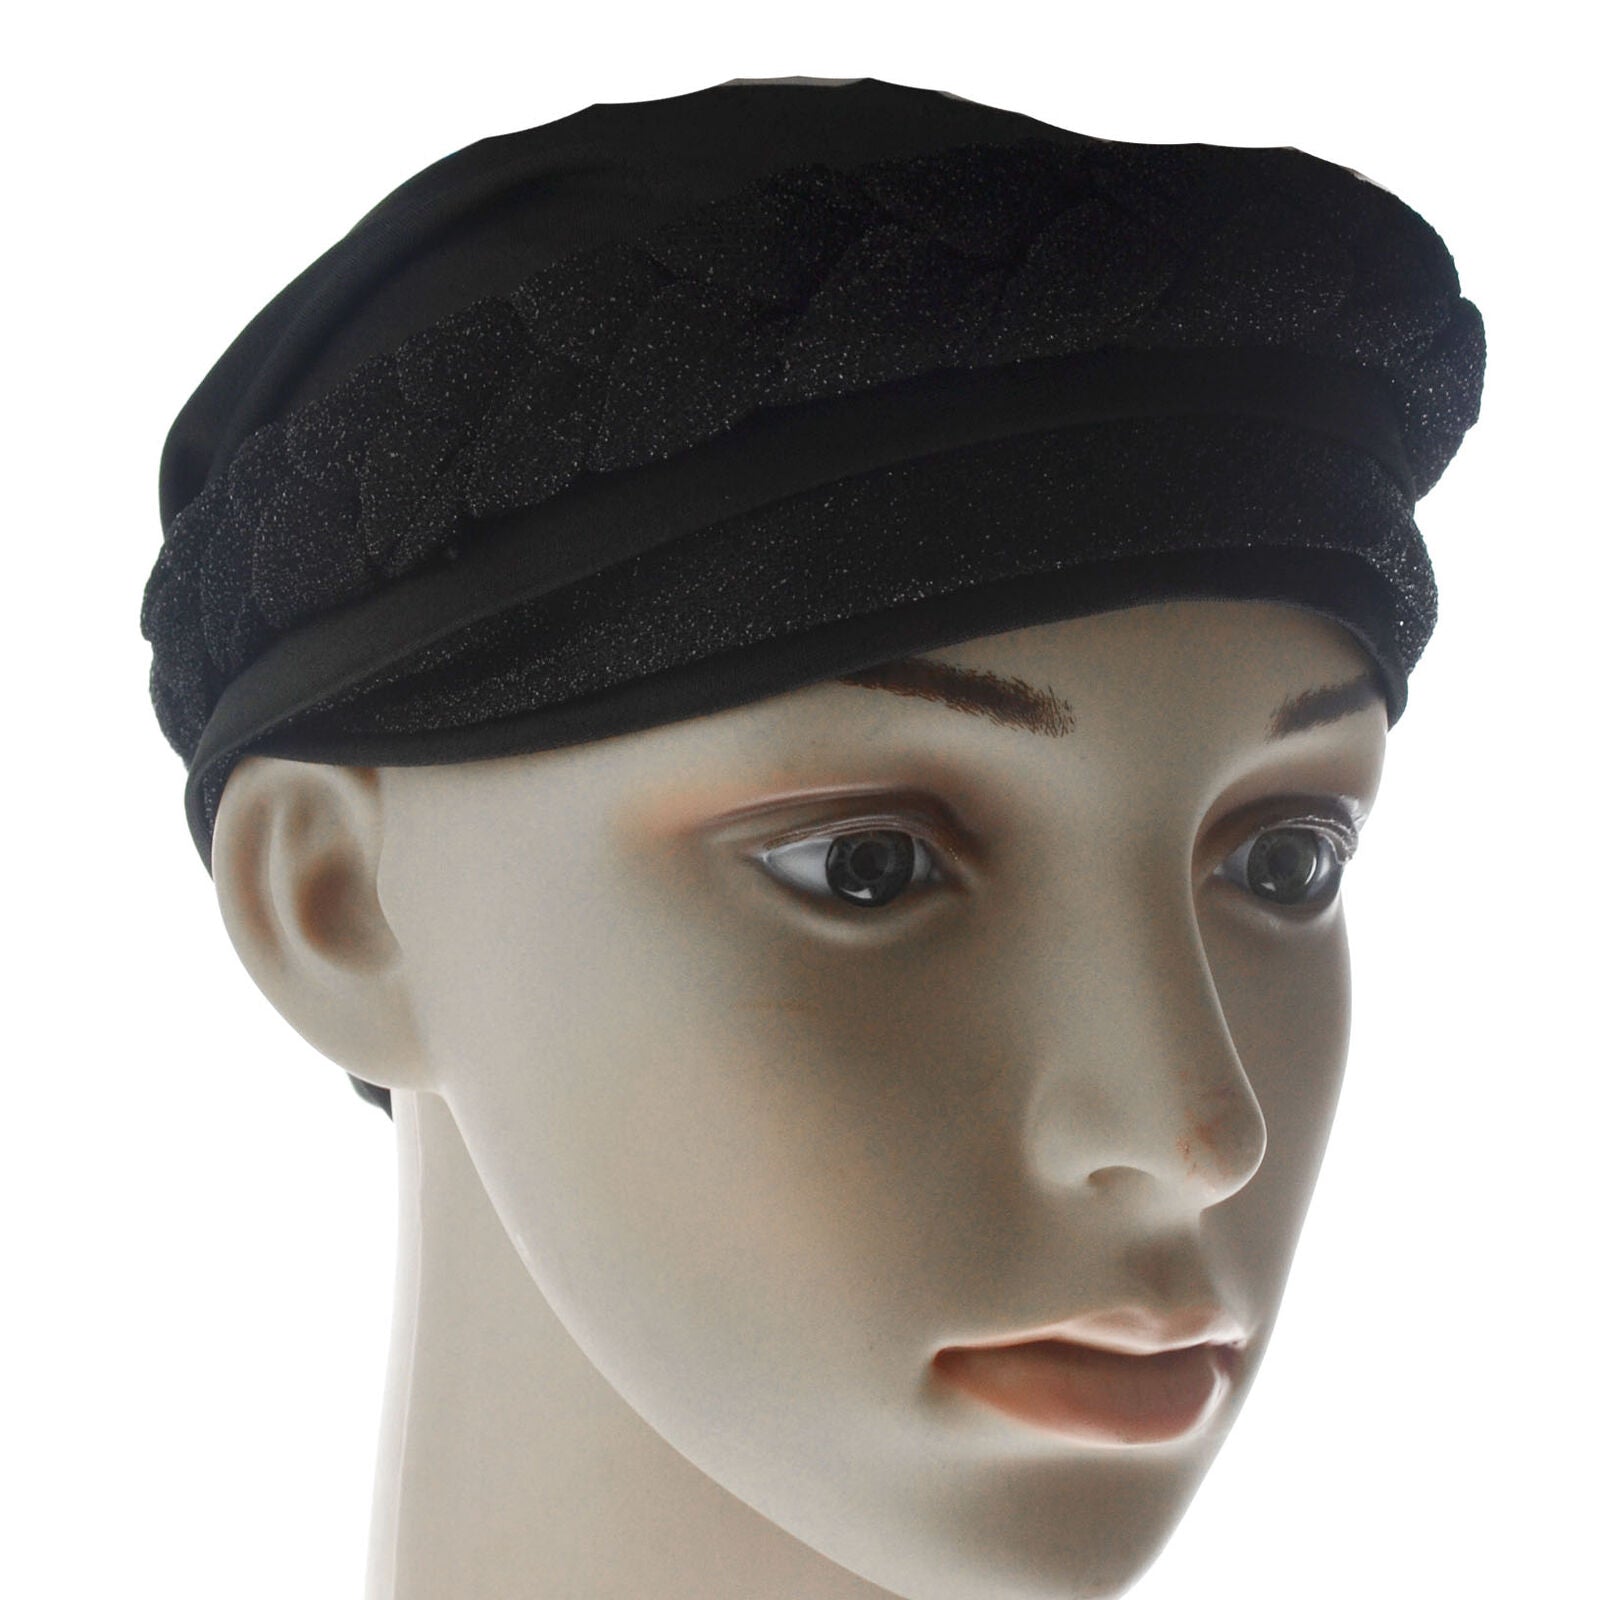 1X Muslim Braid Head Hijab Turban Wrap Cover Cancer Headwear Chemo Cap Hat